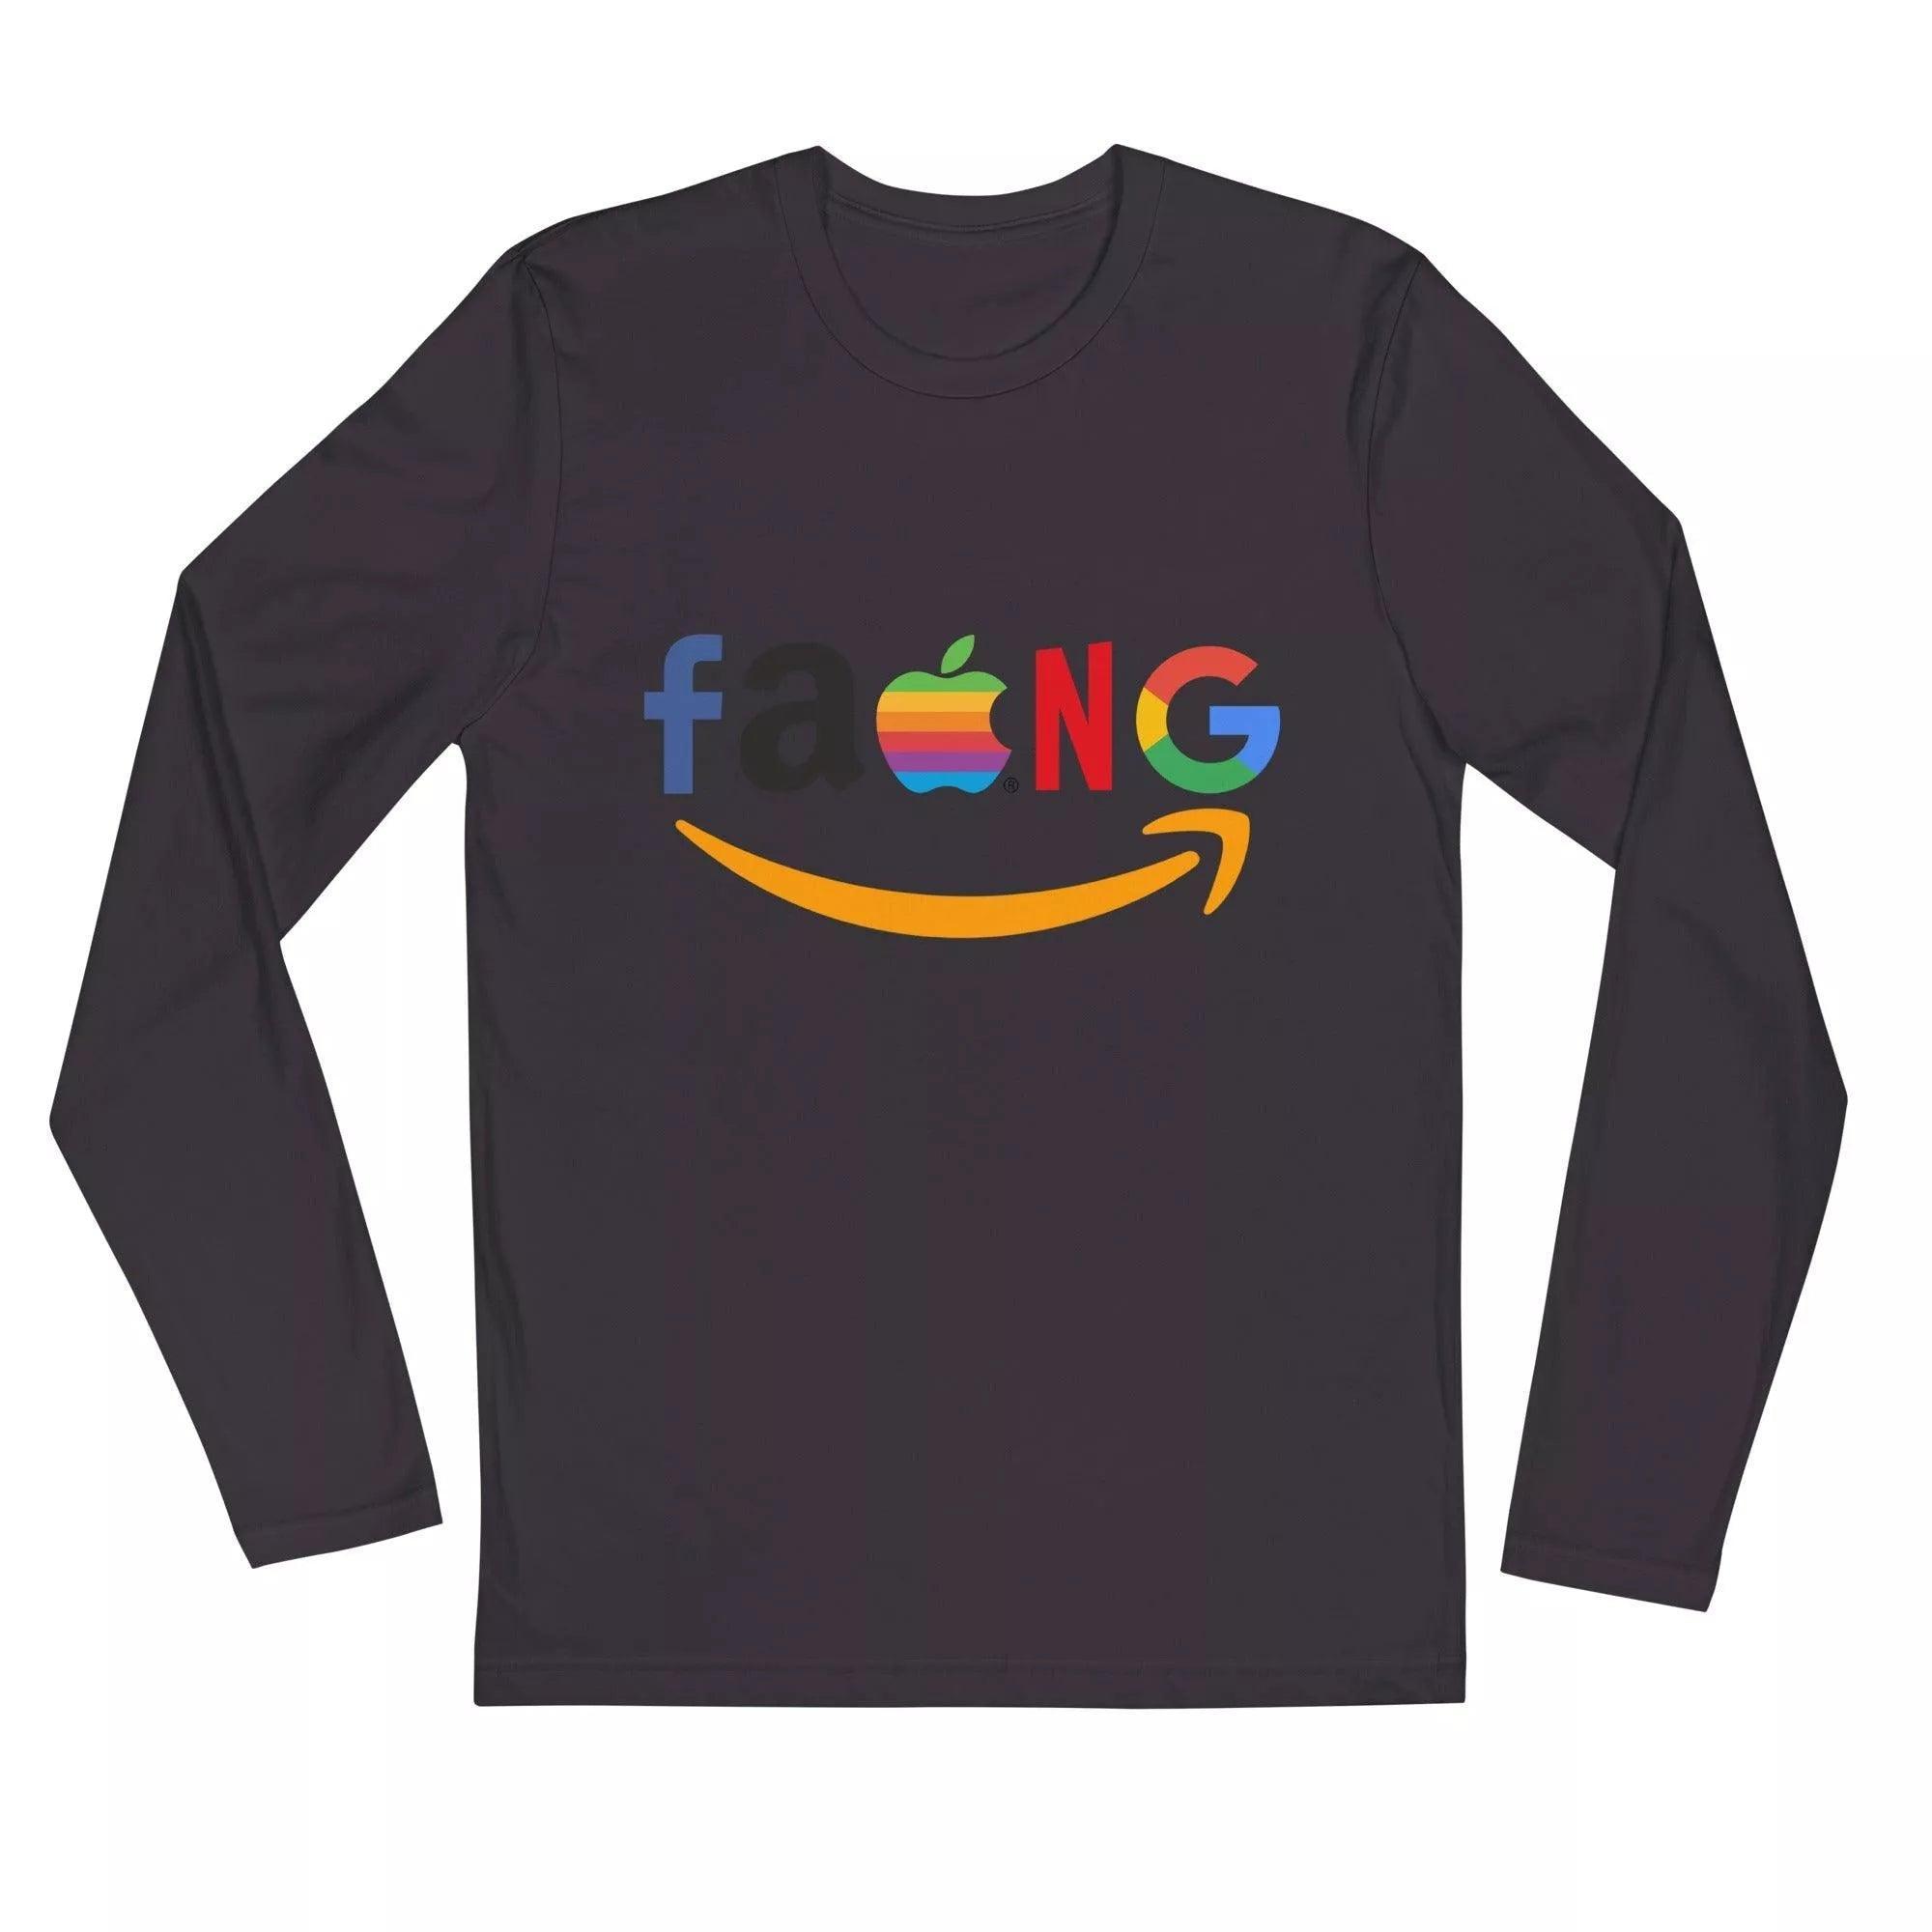 FAANG Long Sleeve T-Shirt - InvestmenTees